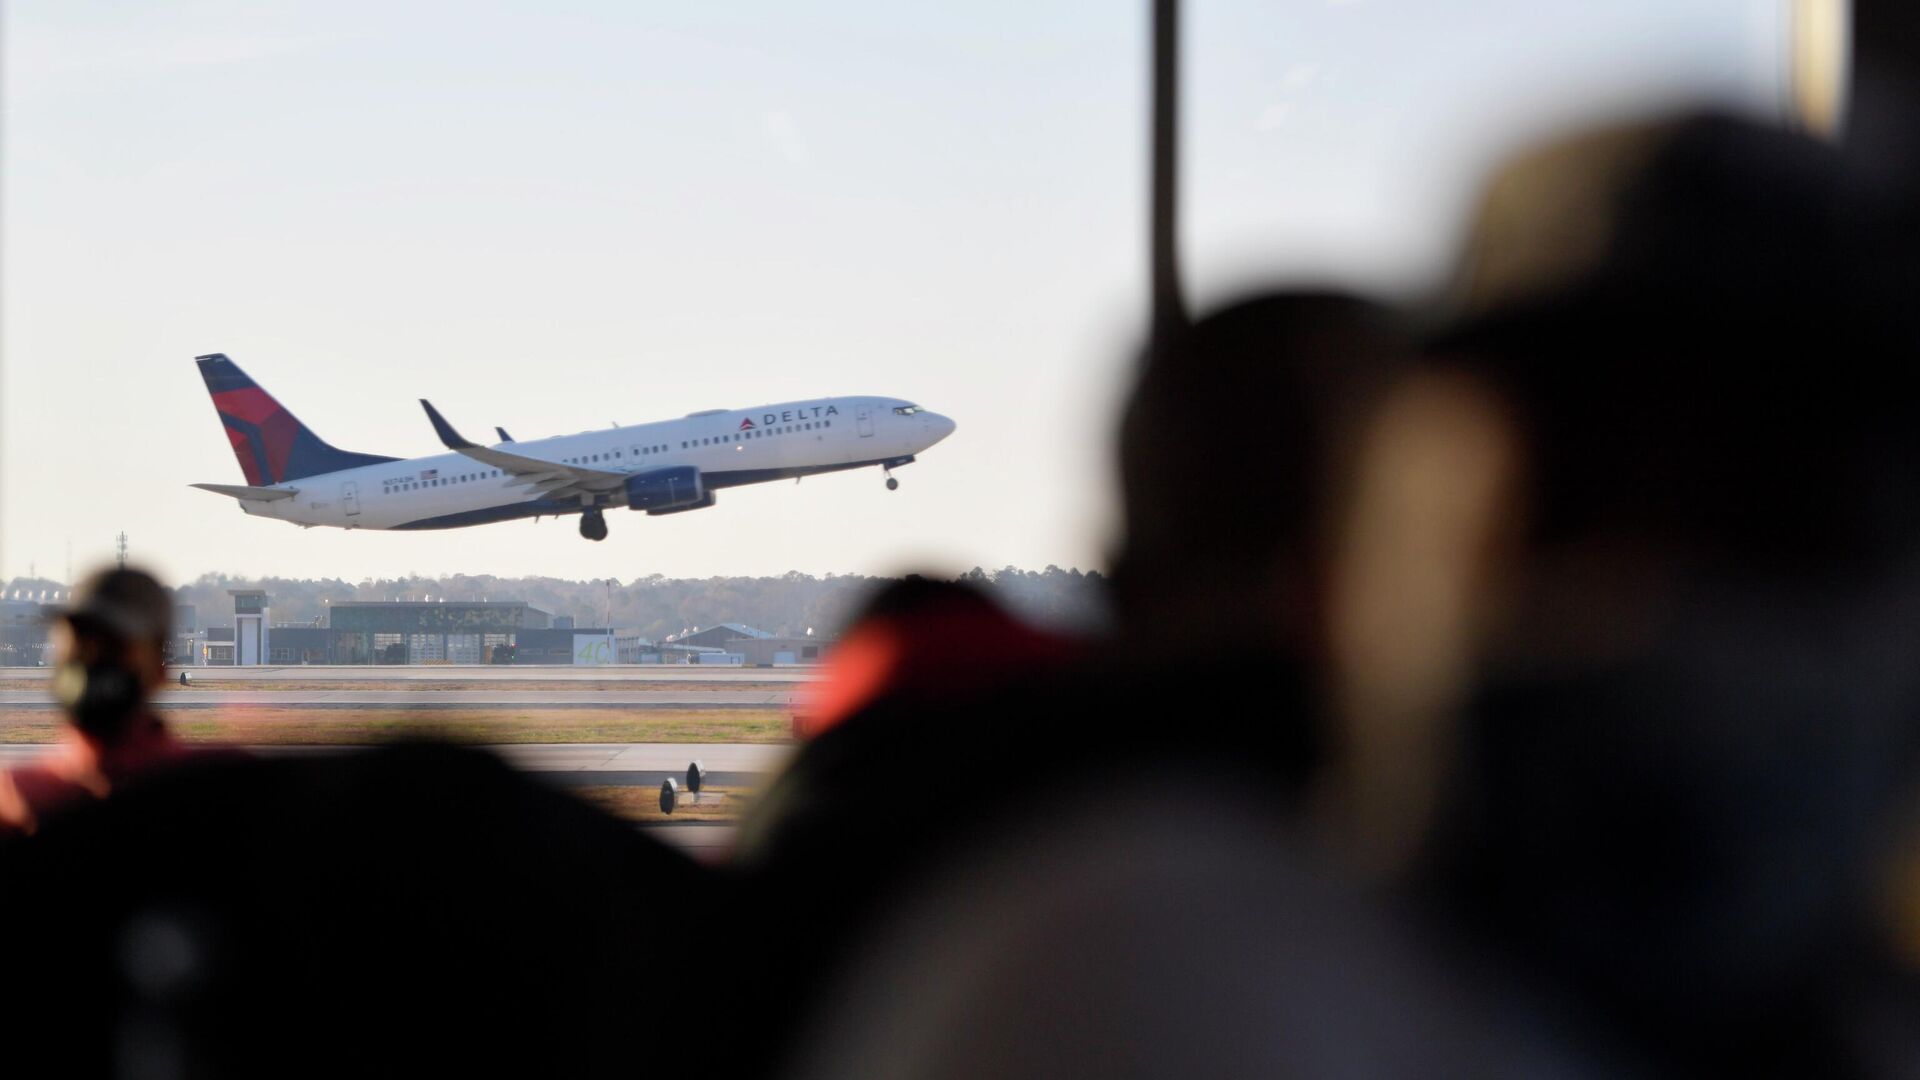 A Delta Airlines aircraft takes off as passengers await the boarding process, Thursday, Dec. 2, 2021, at Hartsfield-Jackson Atlanta International Airport, in Atlanta. - Sputnik International, 1920, 14.05.2022